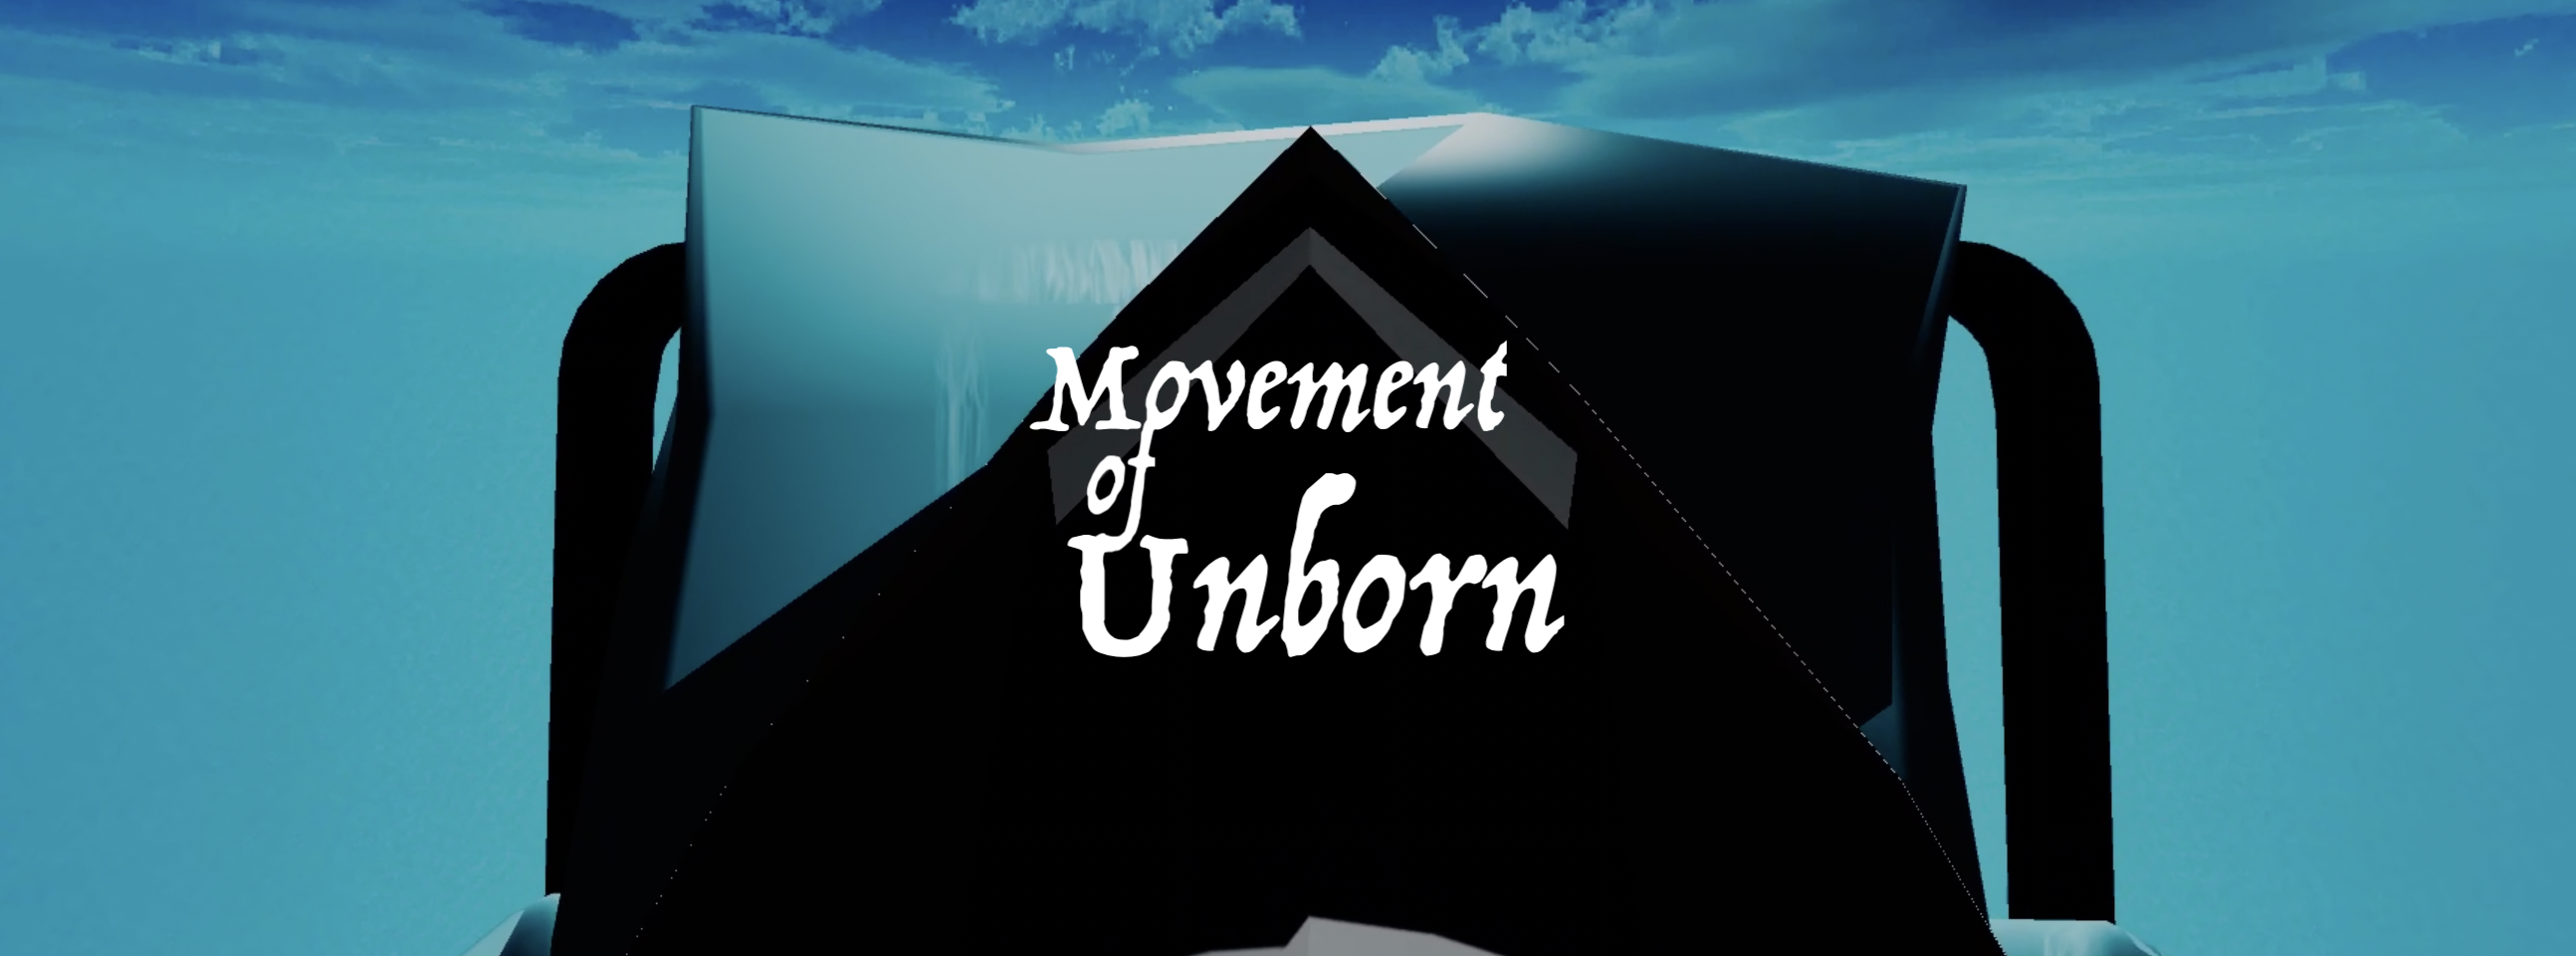 Movement of Unborn